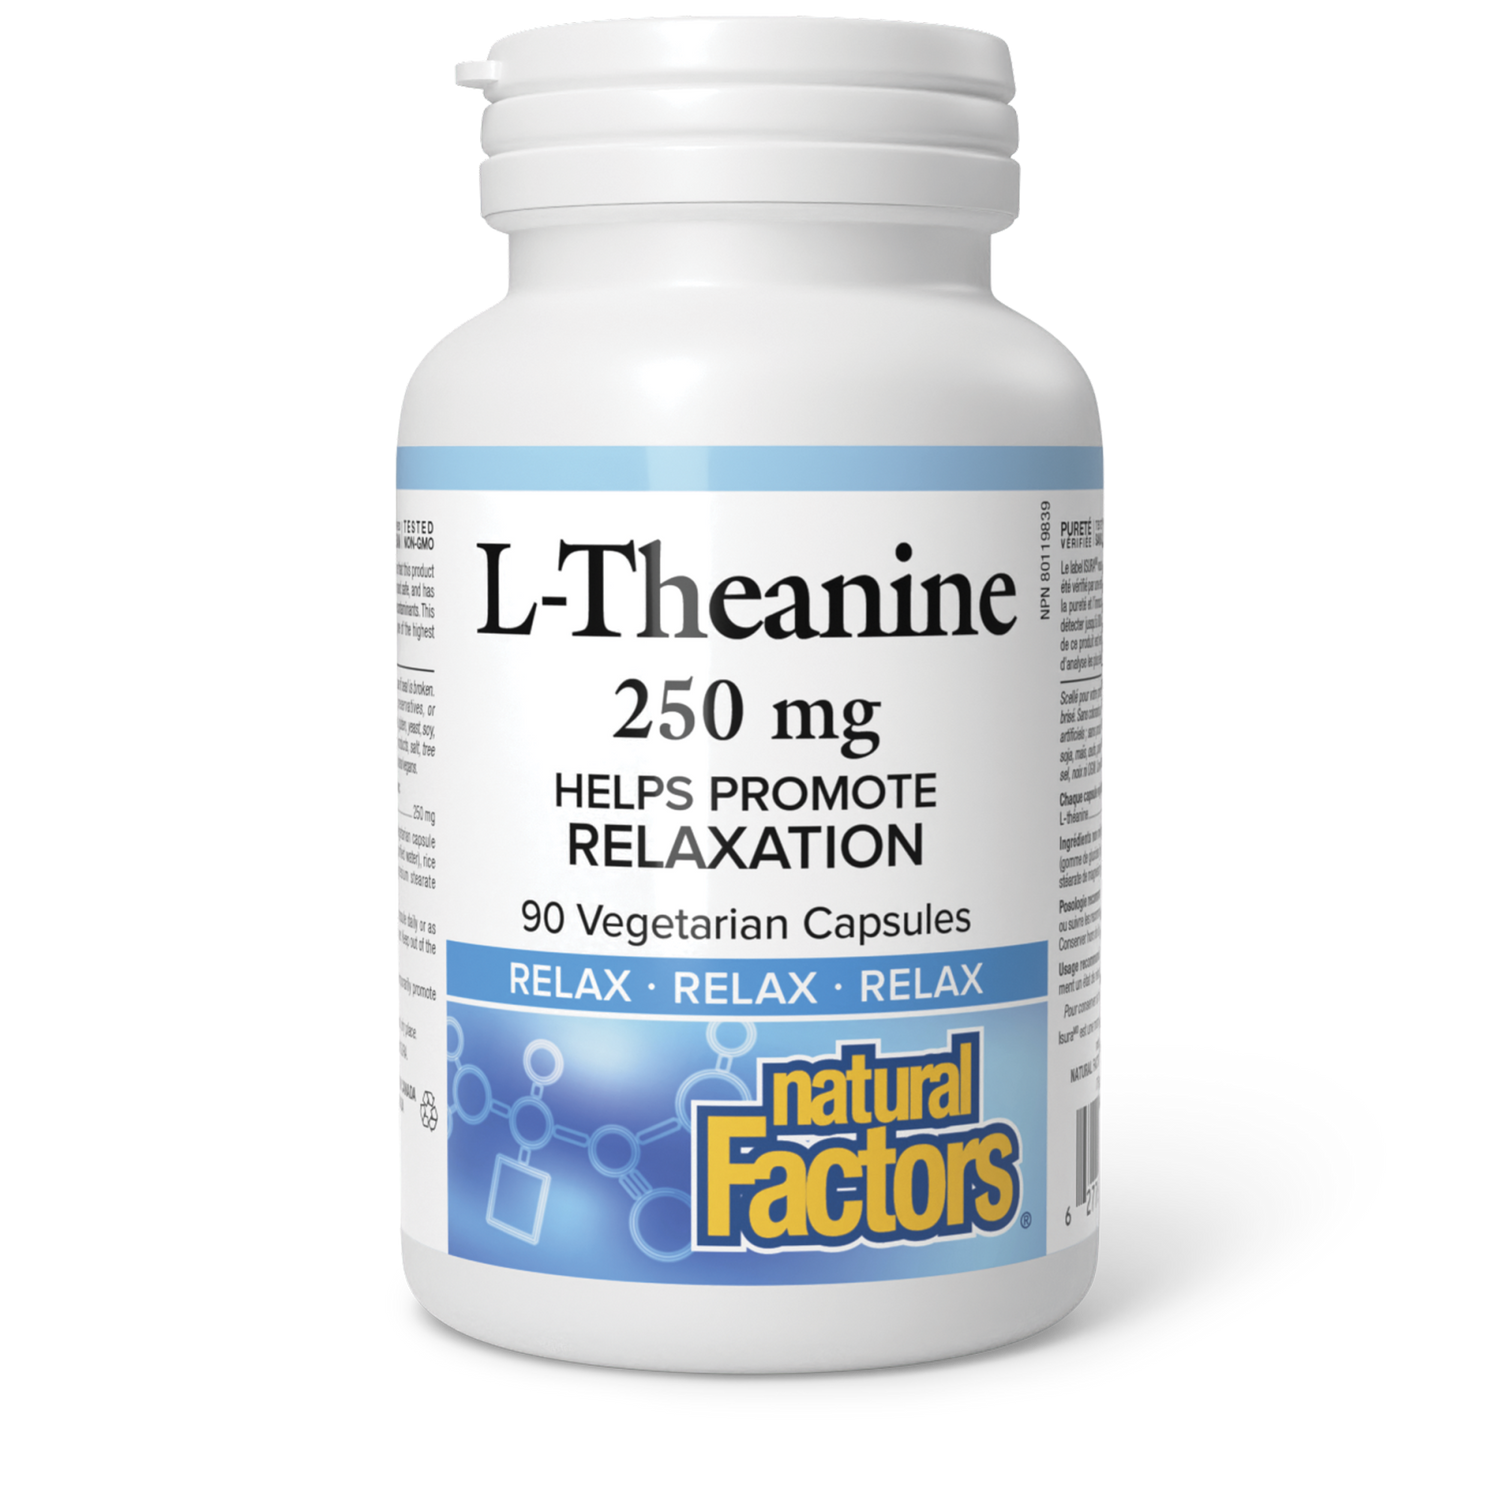 L-Theanine 250 mg, Natural Factors|v|image|2866